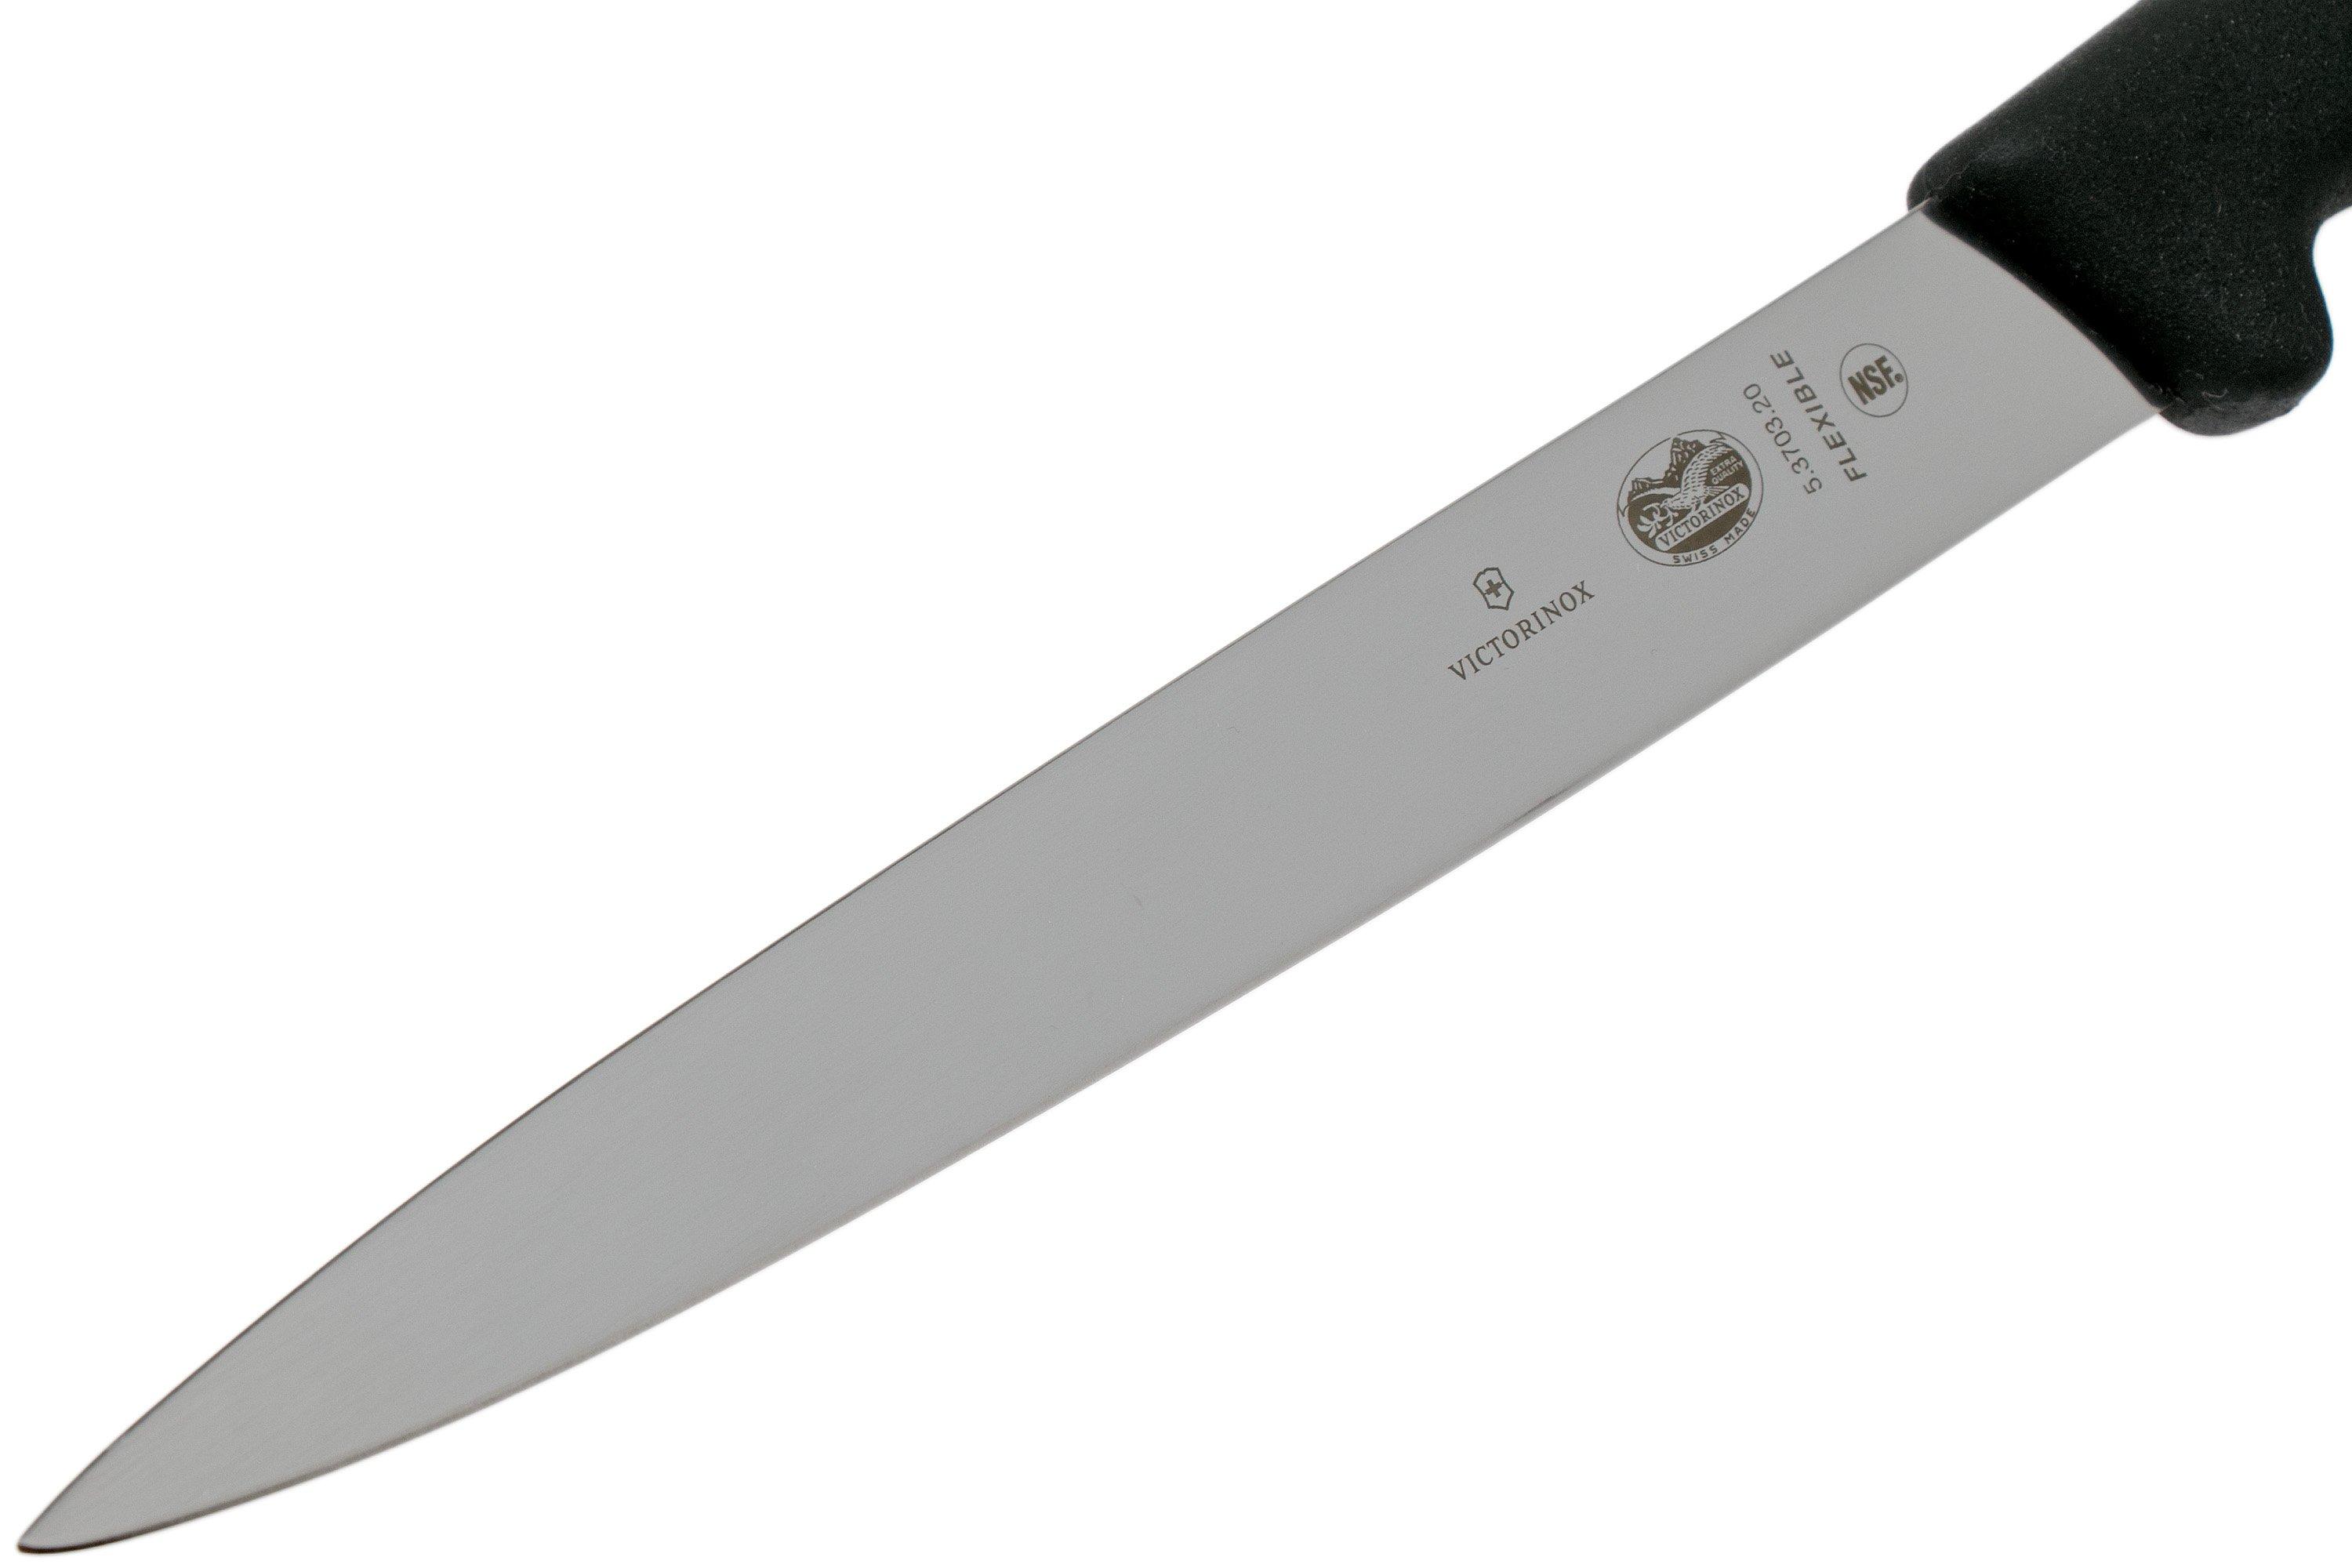 Cuchillo VICTORINOX 5.3703.20 para filetear